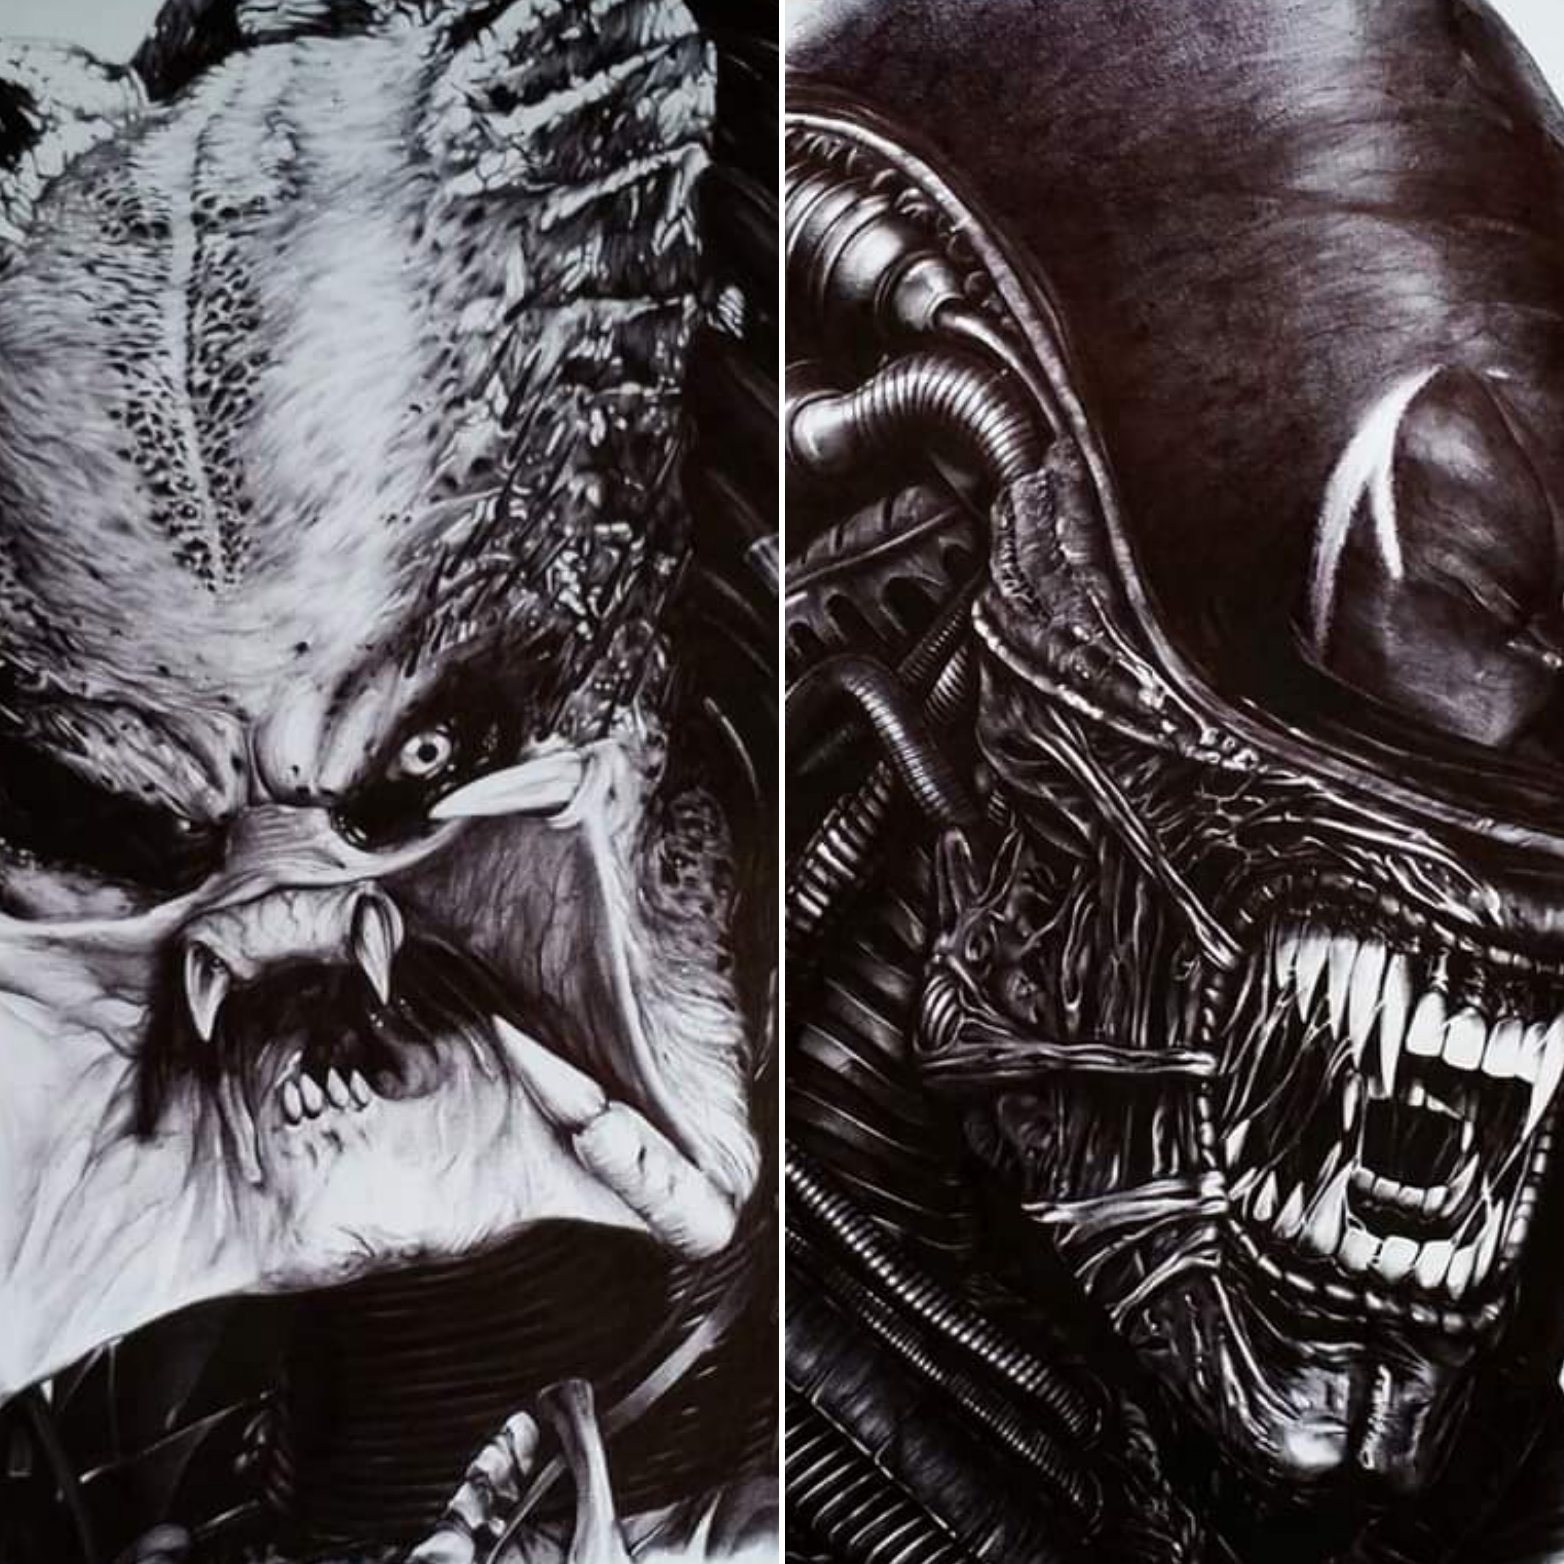 Aliens vs Predator (2010) Concept Art - Alien vs. Predator Galaxy